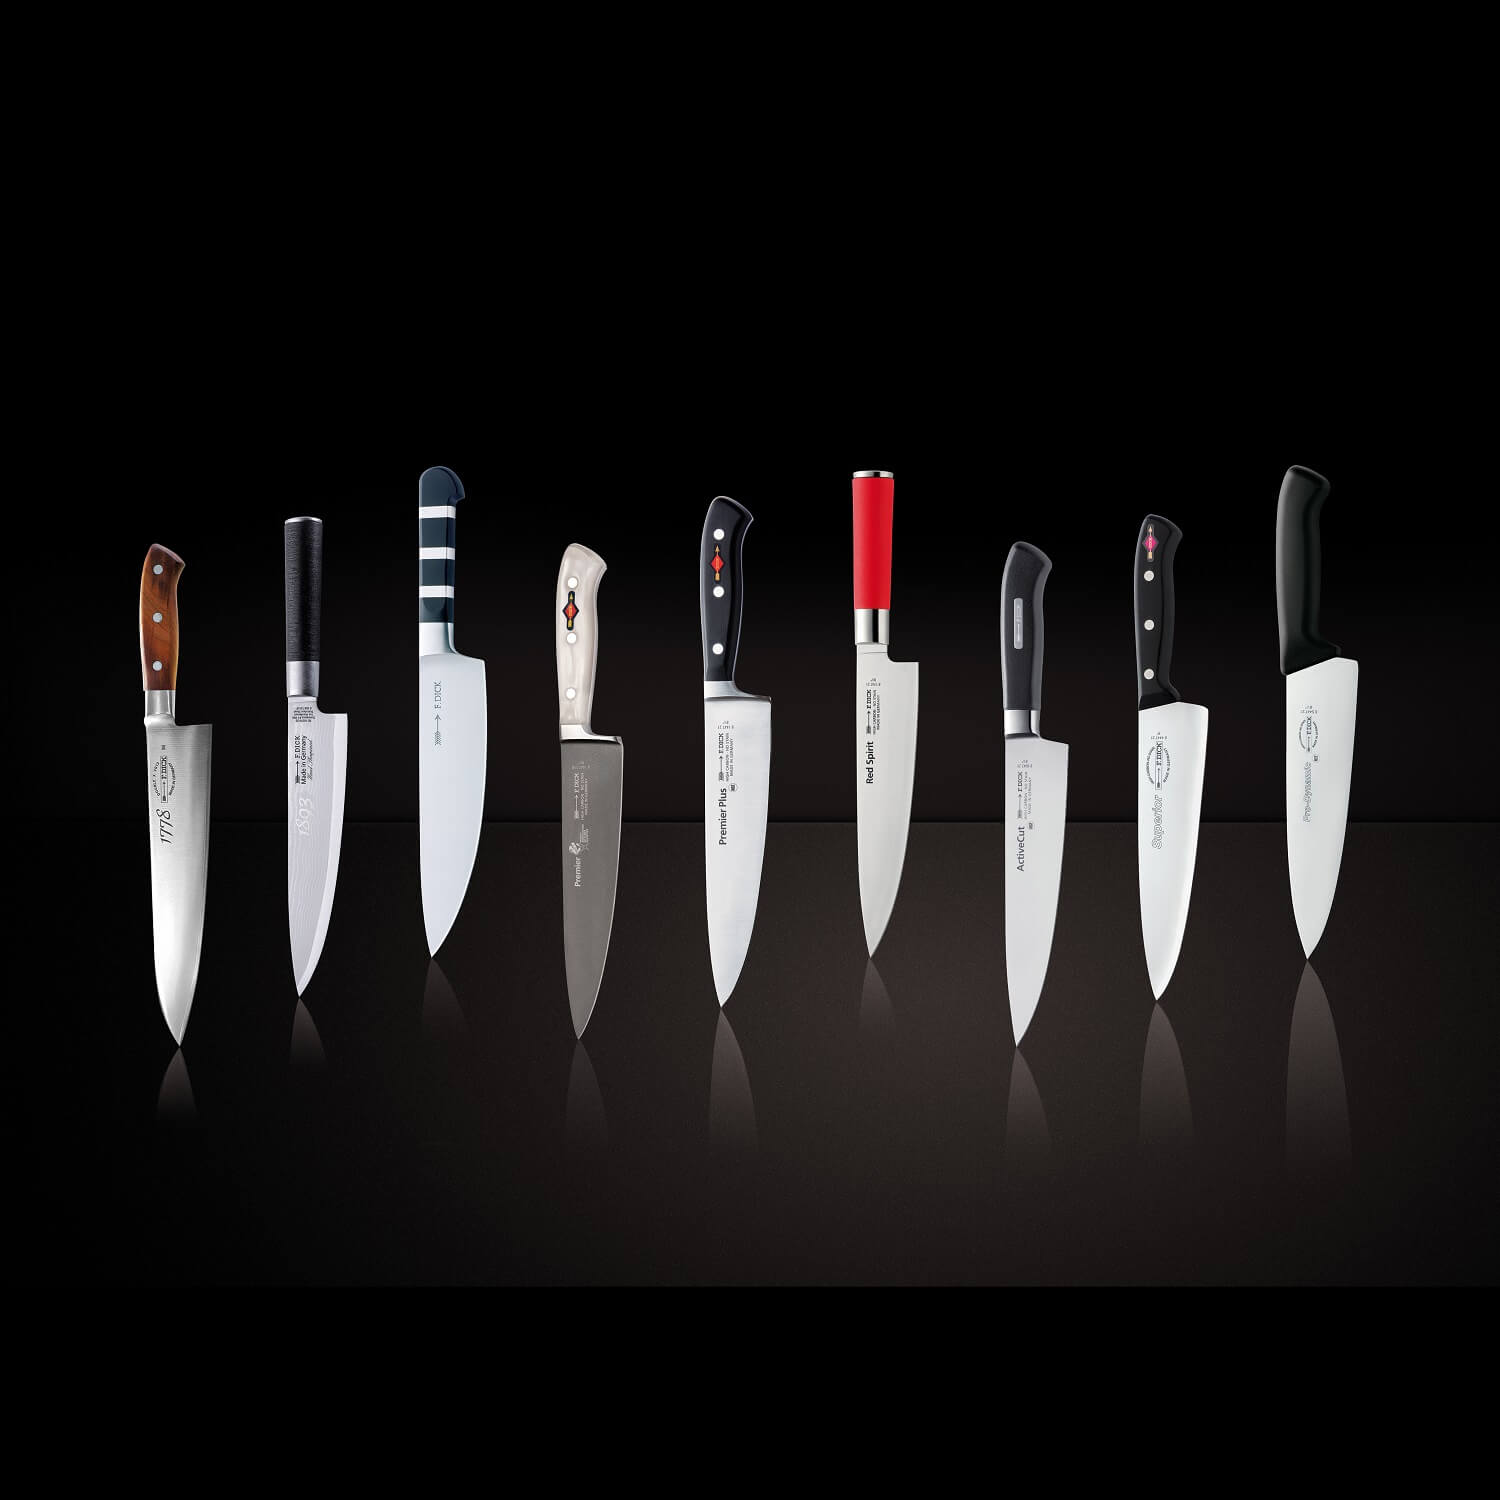 F dick. Нож Miyabi 5000 dp. Нож dick 8288113. Кухонный нож. Набор ножей для кухни.